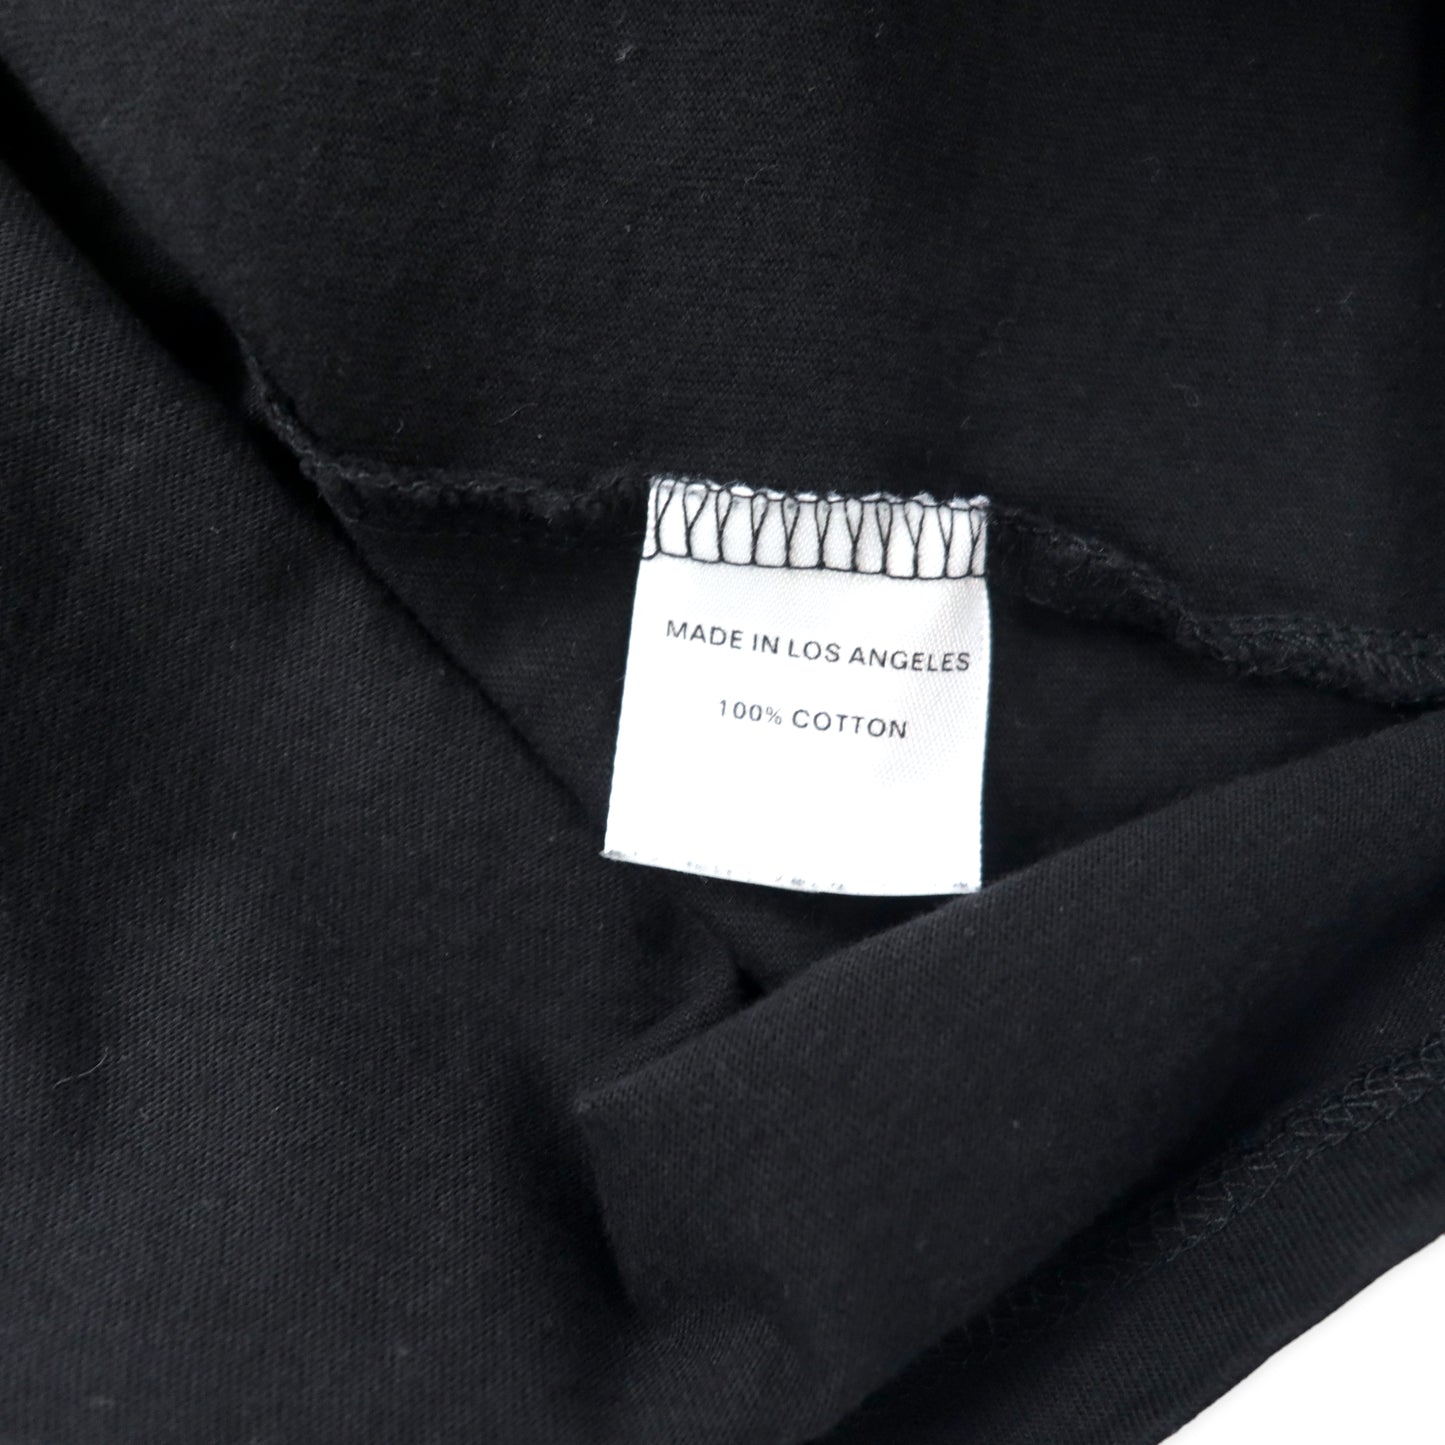 BIANCA CHANDON Tシャツ XL ブラック コットン HOMME FEMME T-SHIRT ロサンゼルス製 未使用品